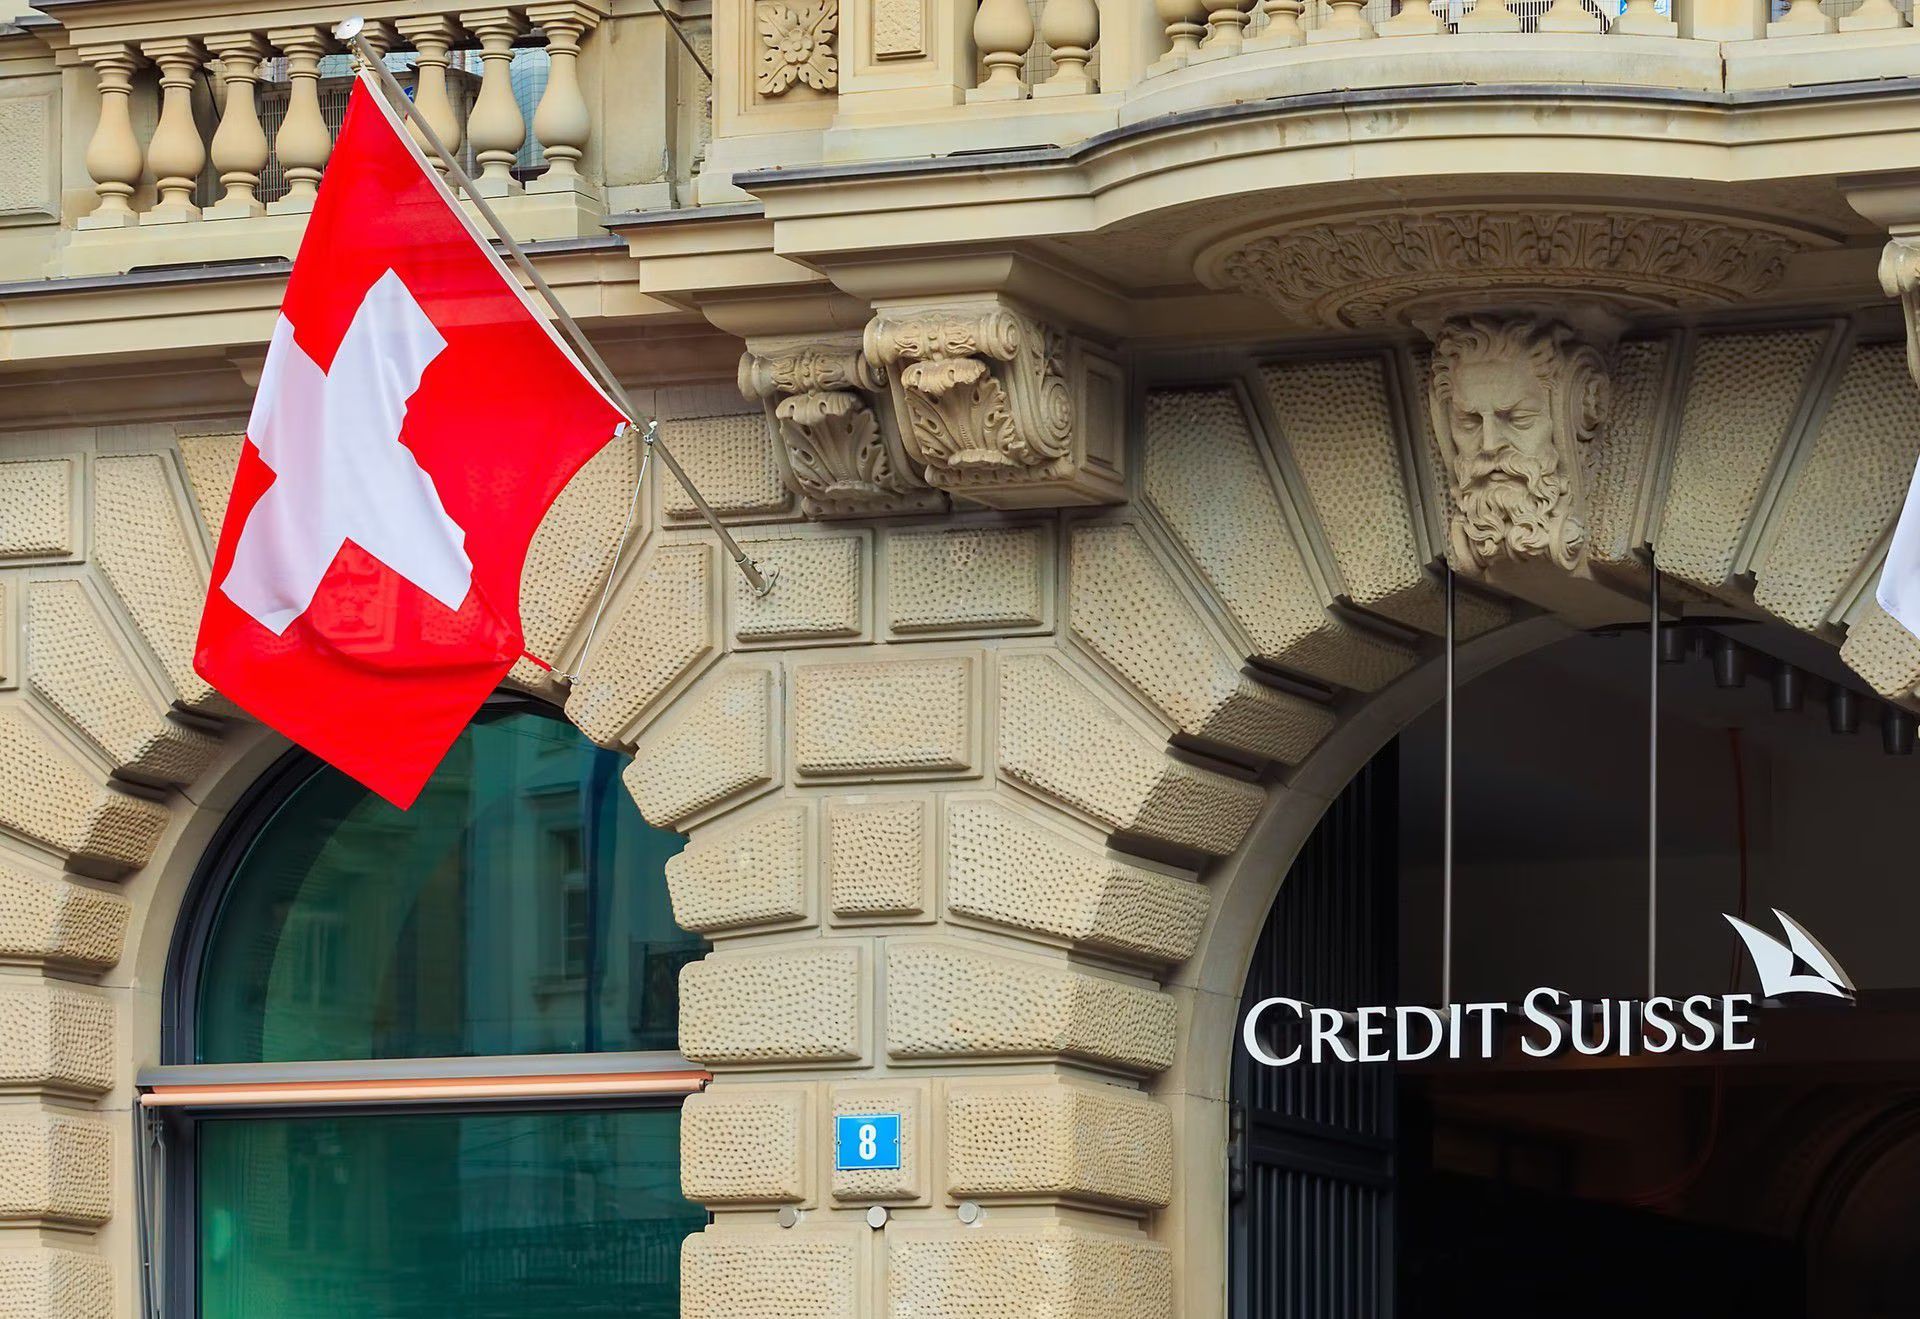 Credit Suisse Swiss Bank failure